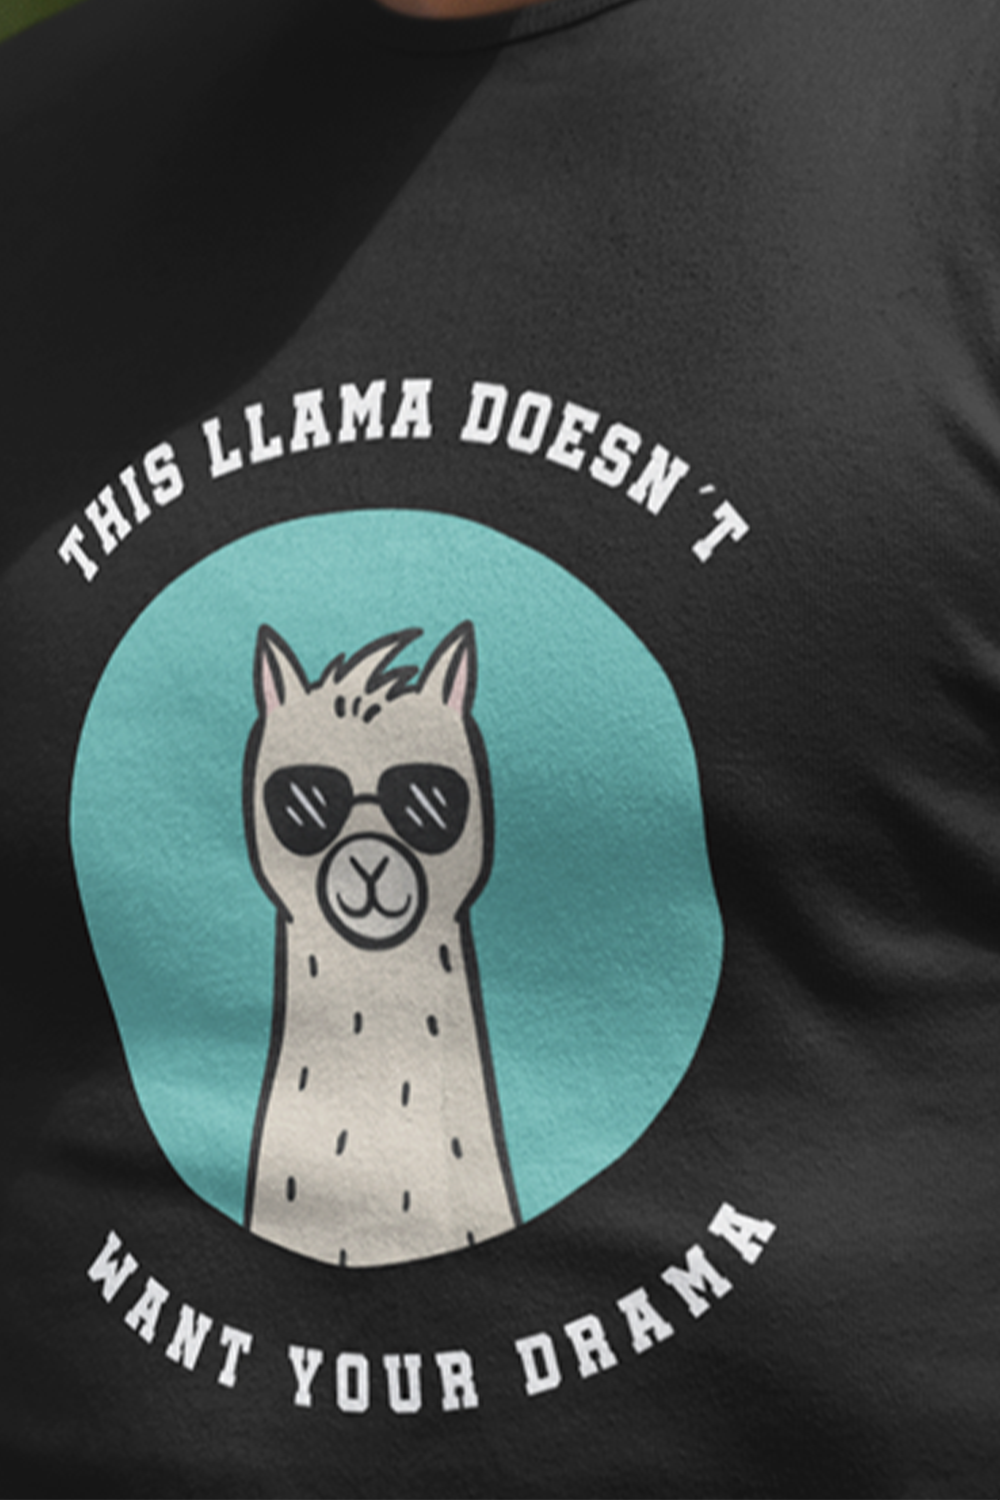 This Llama Doesnt Want Your Drama Graphic Printed Black Tshirt